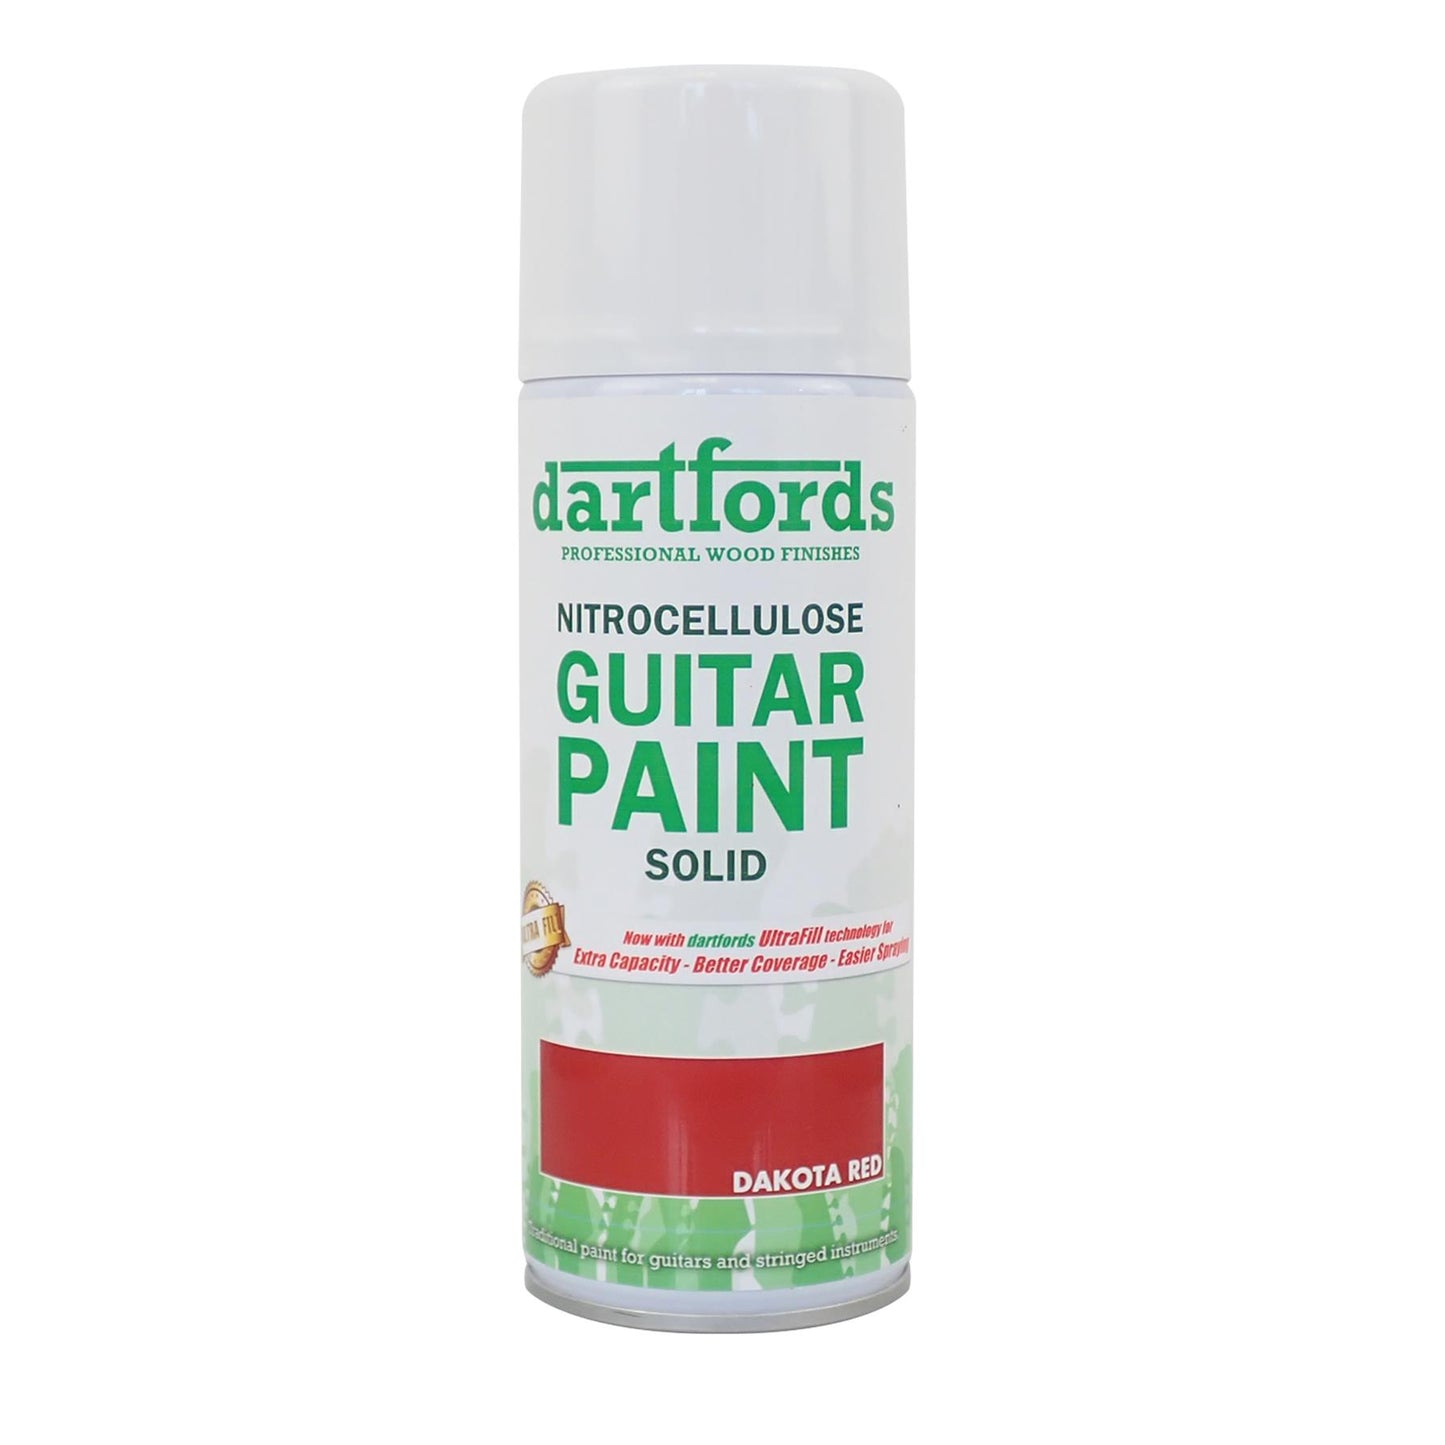 dartfords Dakota Red Nitrocellulose Guitar Paint - 400ml Aerosol